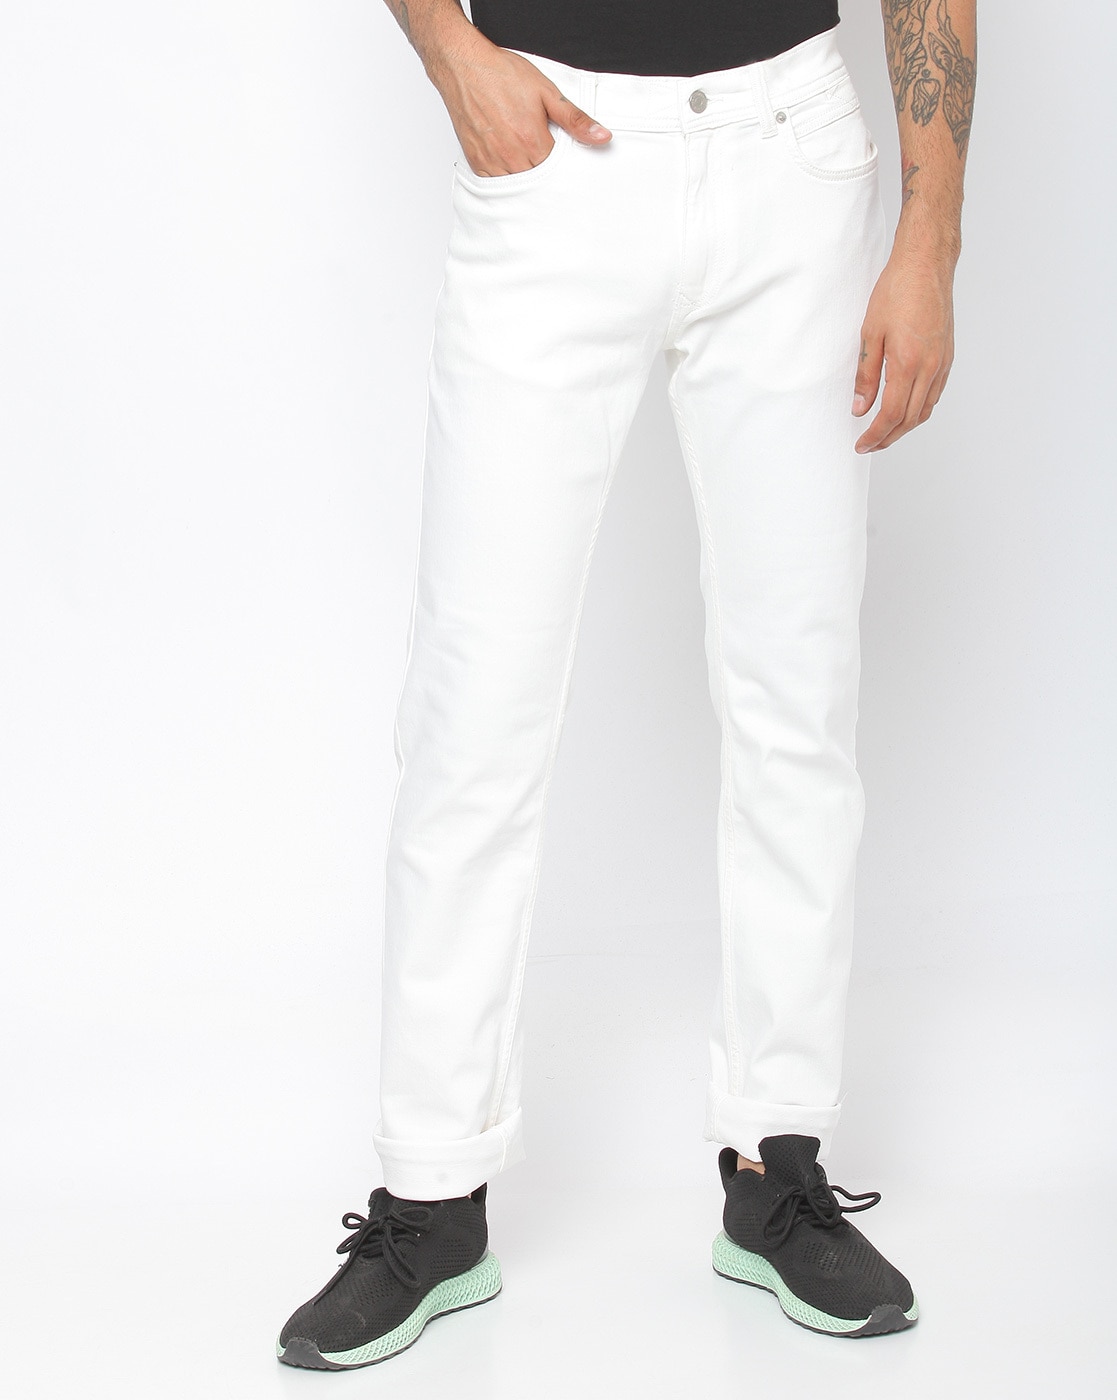 tommy hilfiger white jeans mens